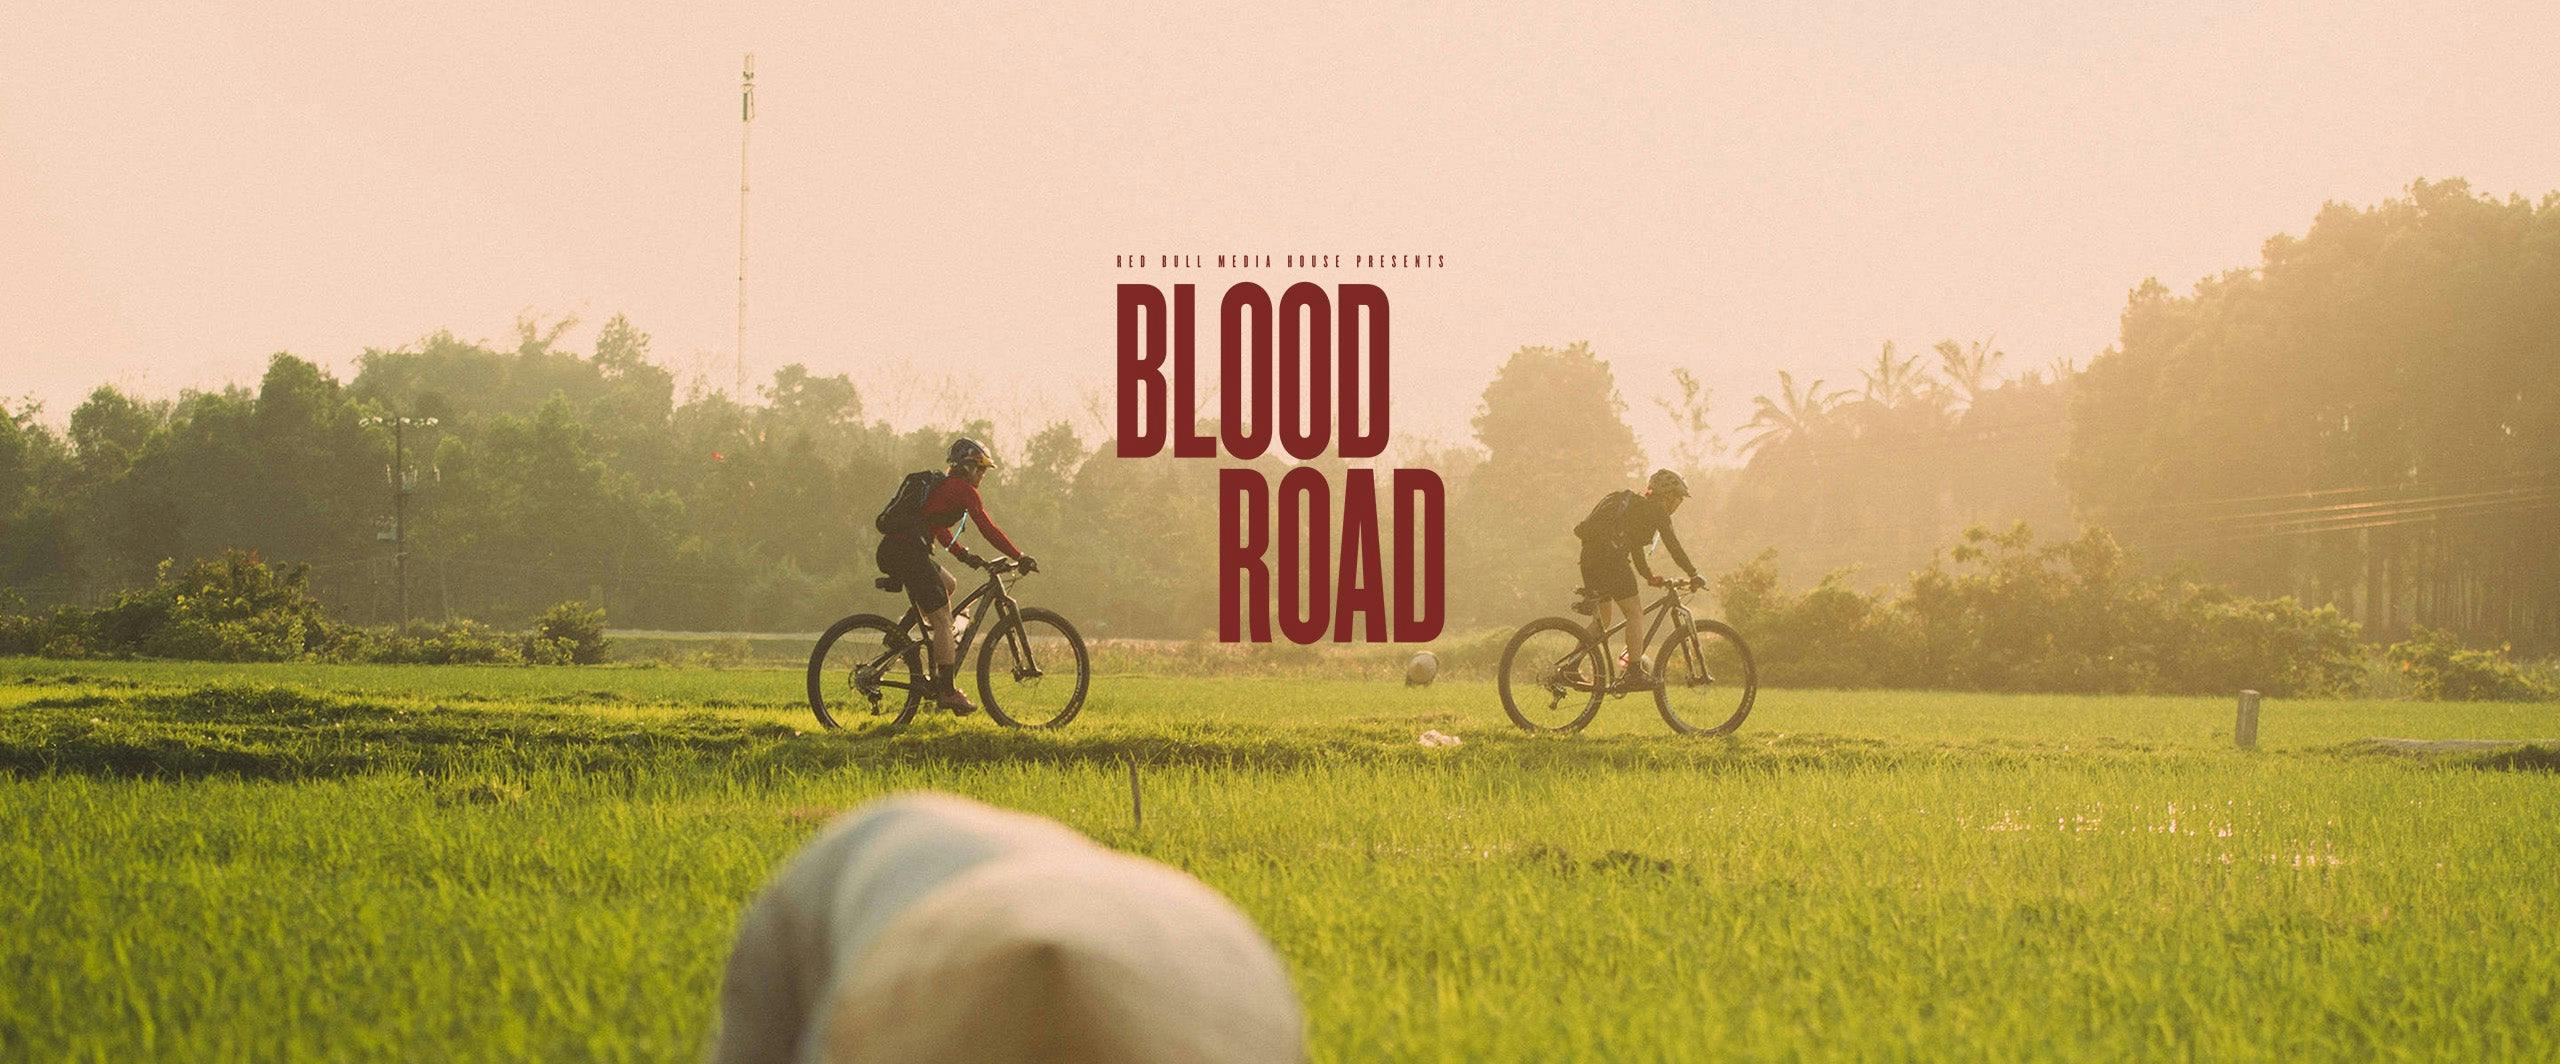 blood road